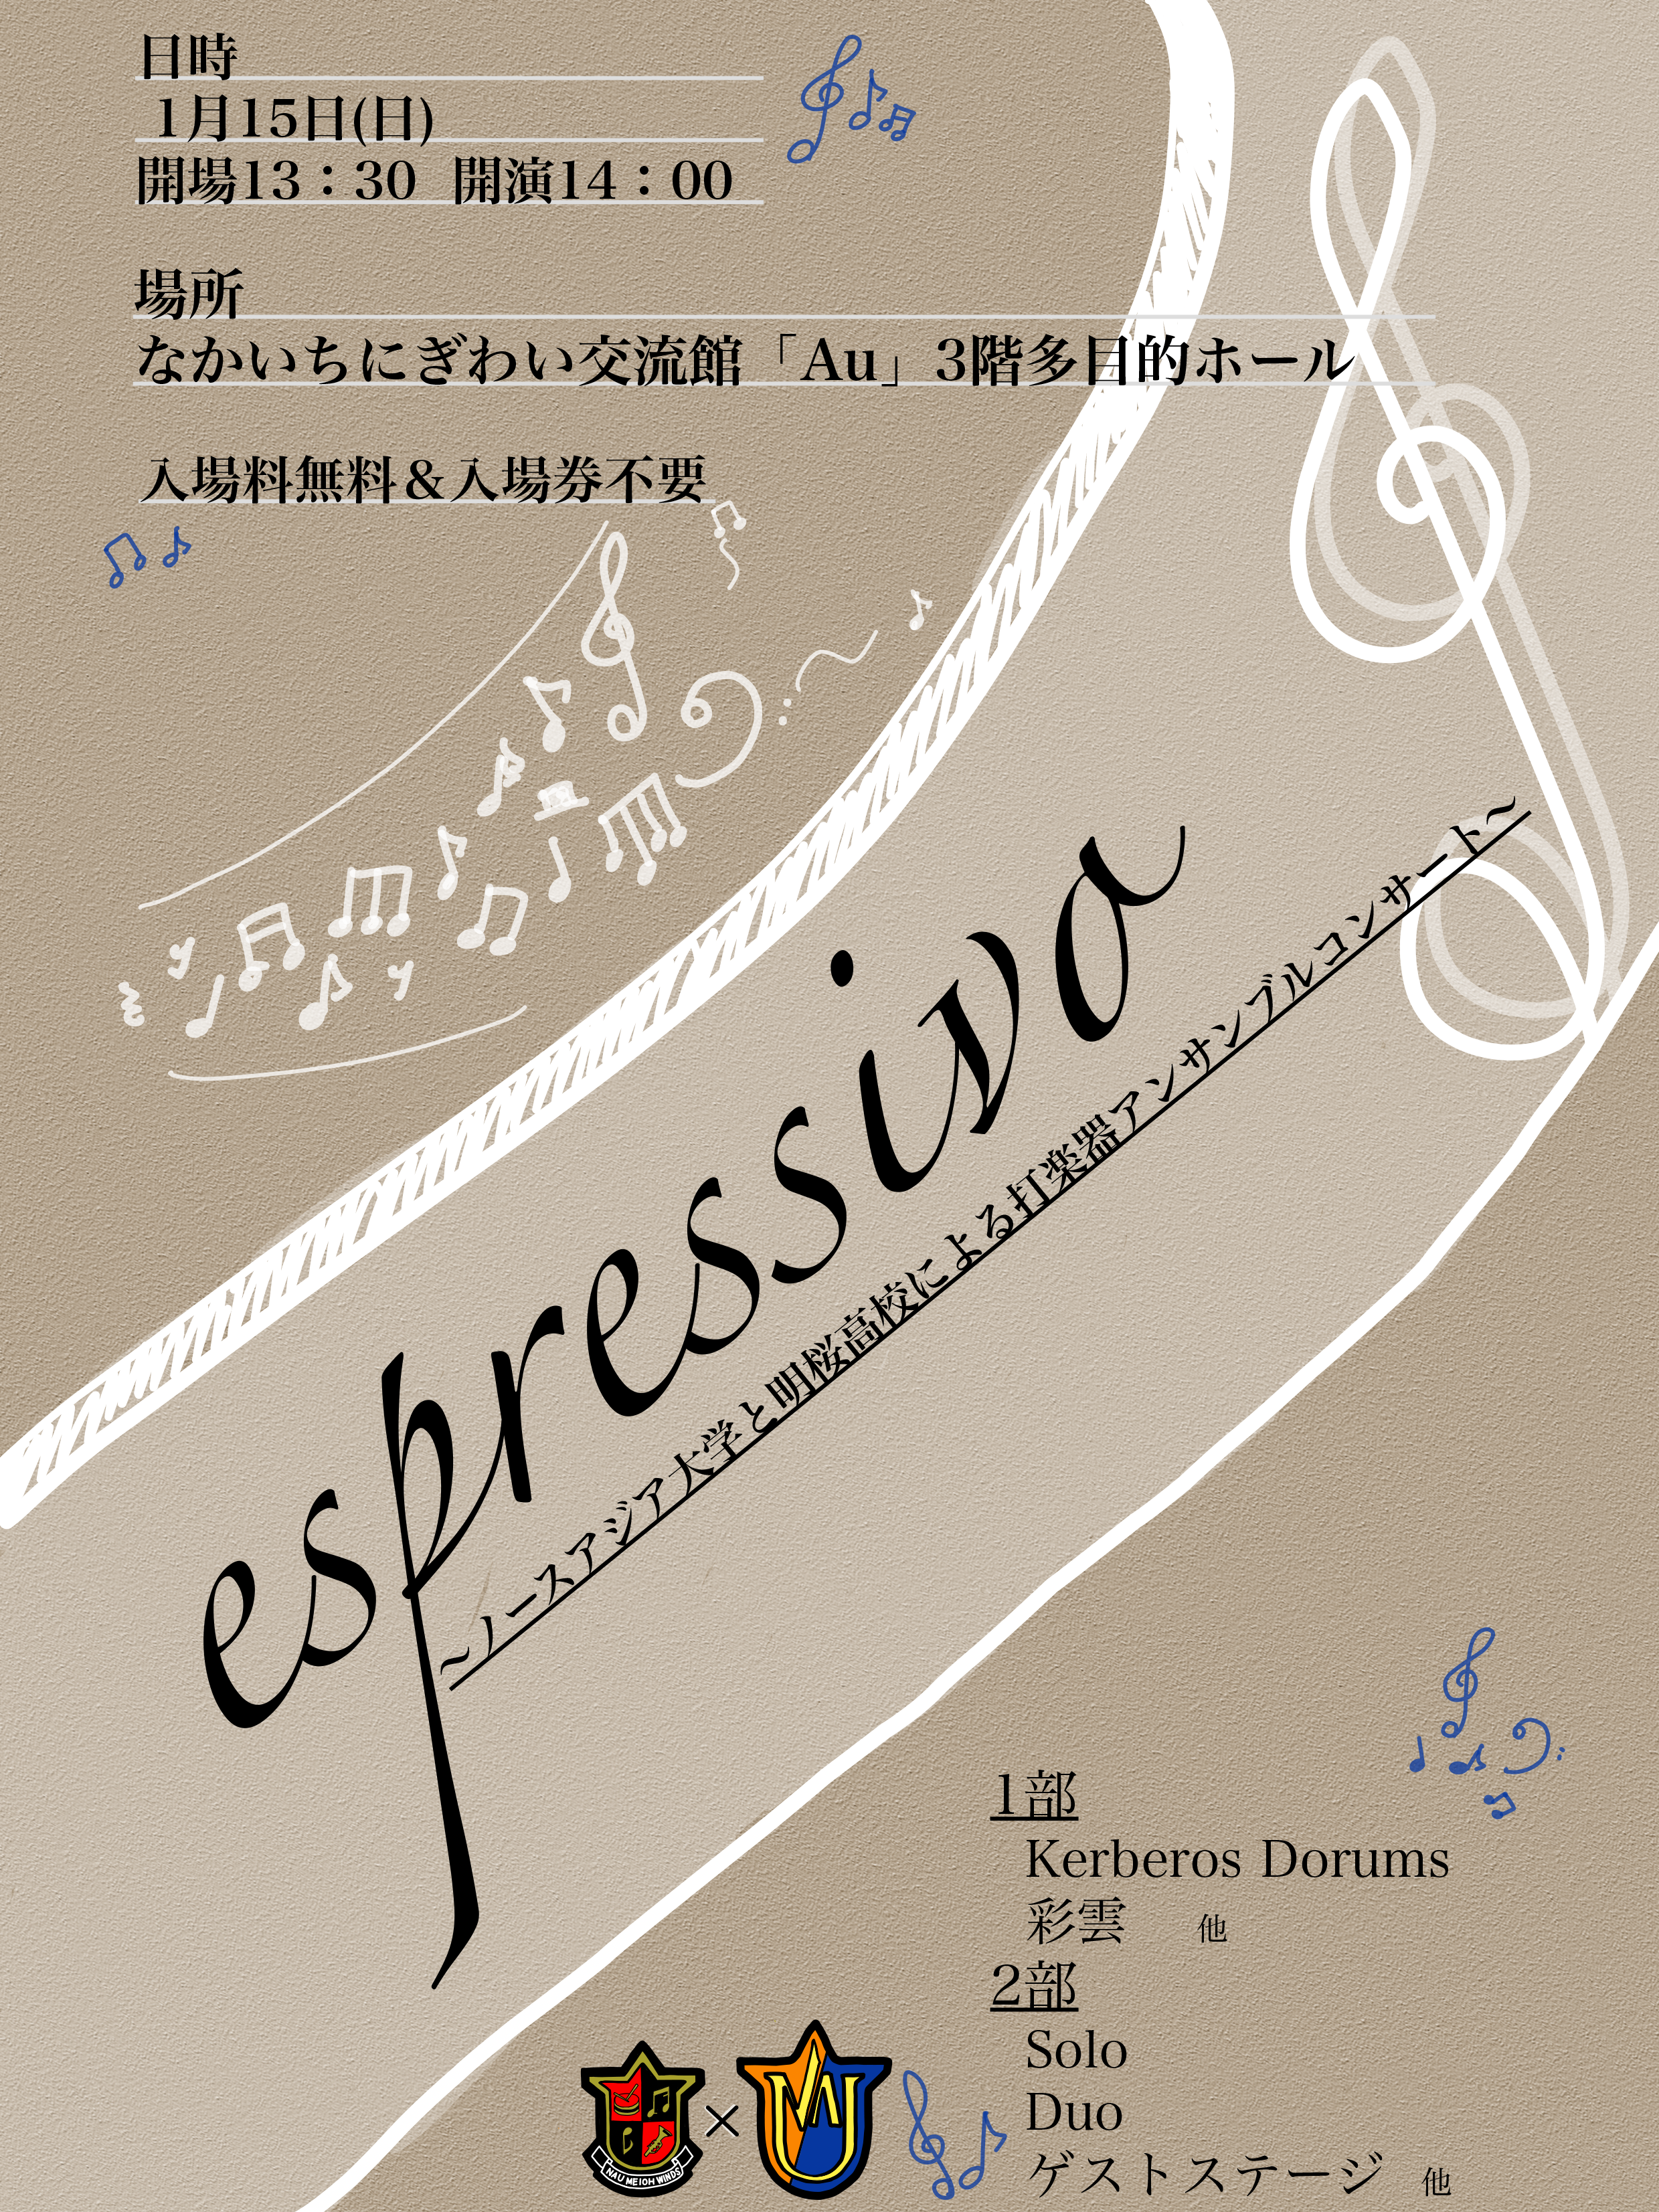 espressiva ～ノースアジア大学と明桜高校による打楽器アンサンブルコンサート～